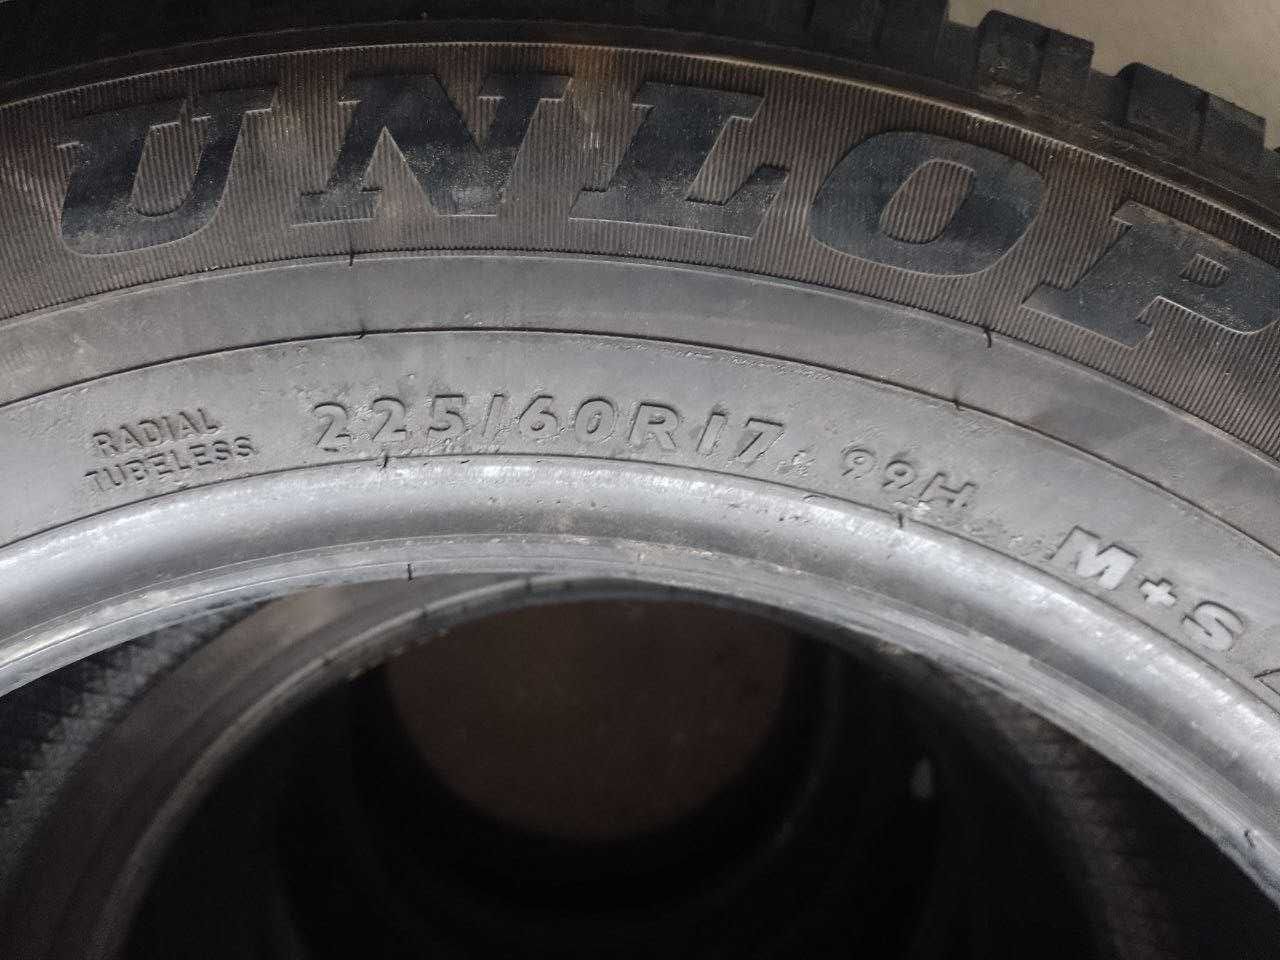 Dunlop sp wintersport 3d 225/60R17 2014 рік залишок протектора 5.5мм